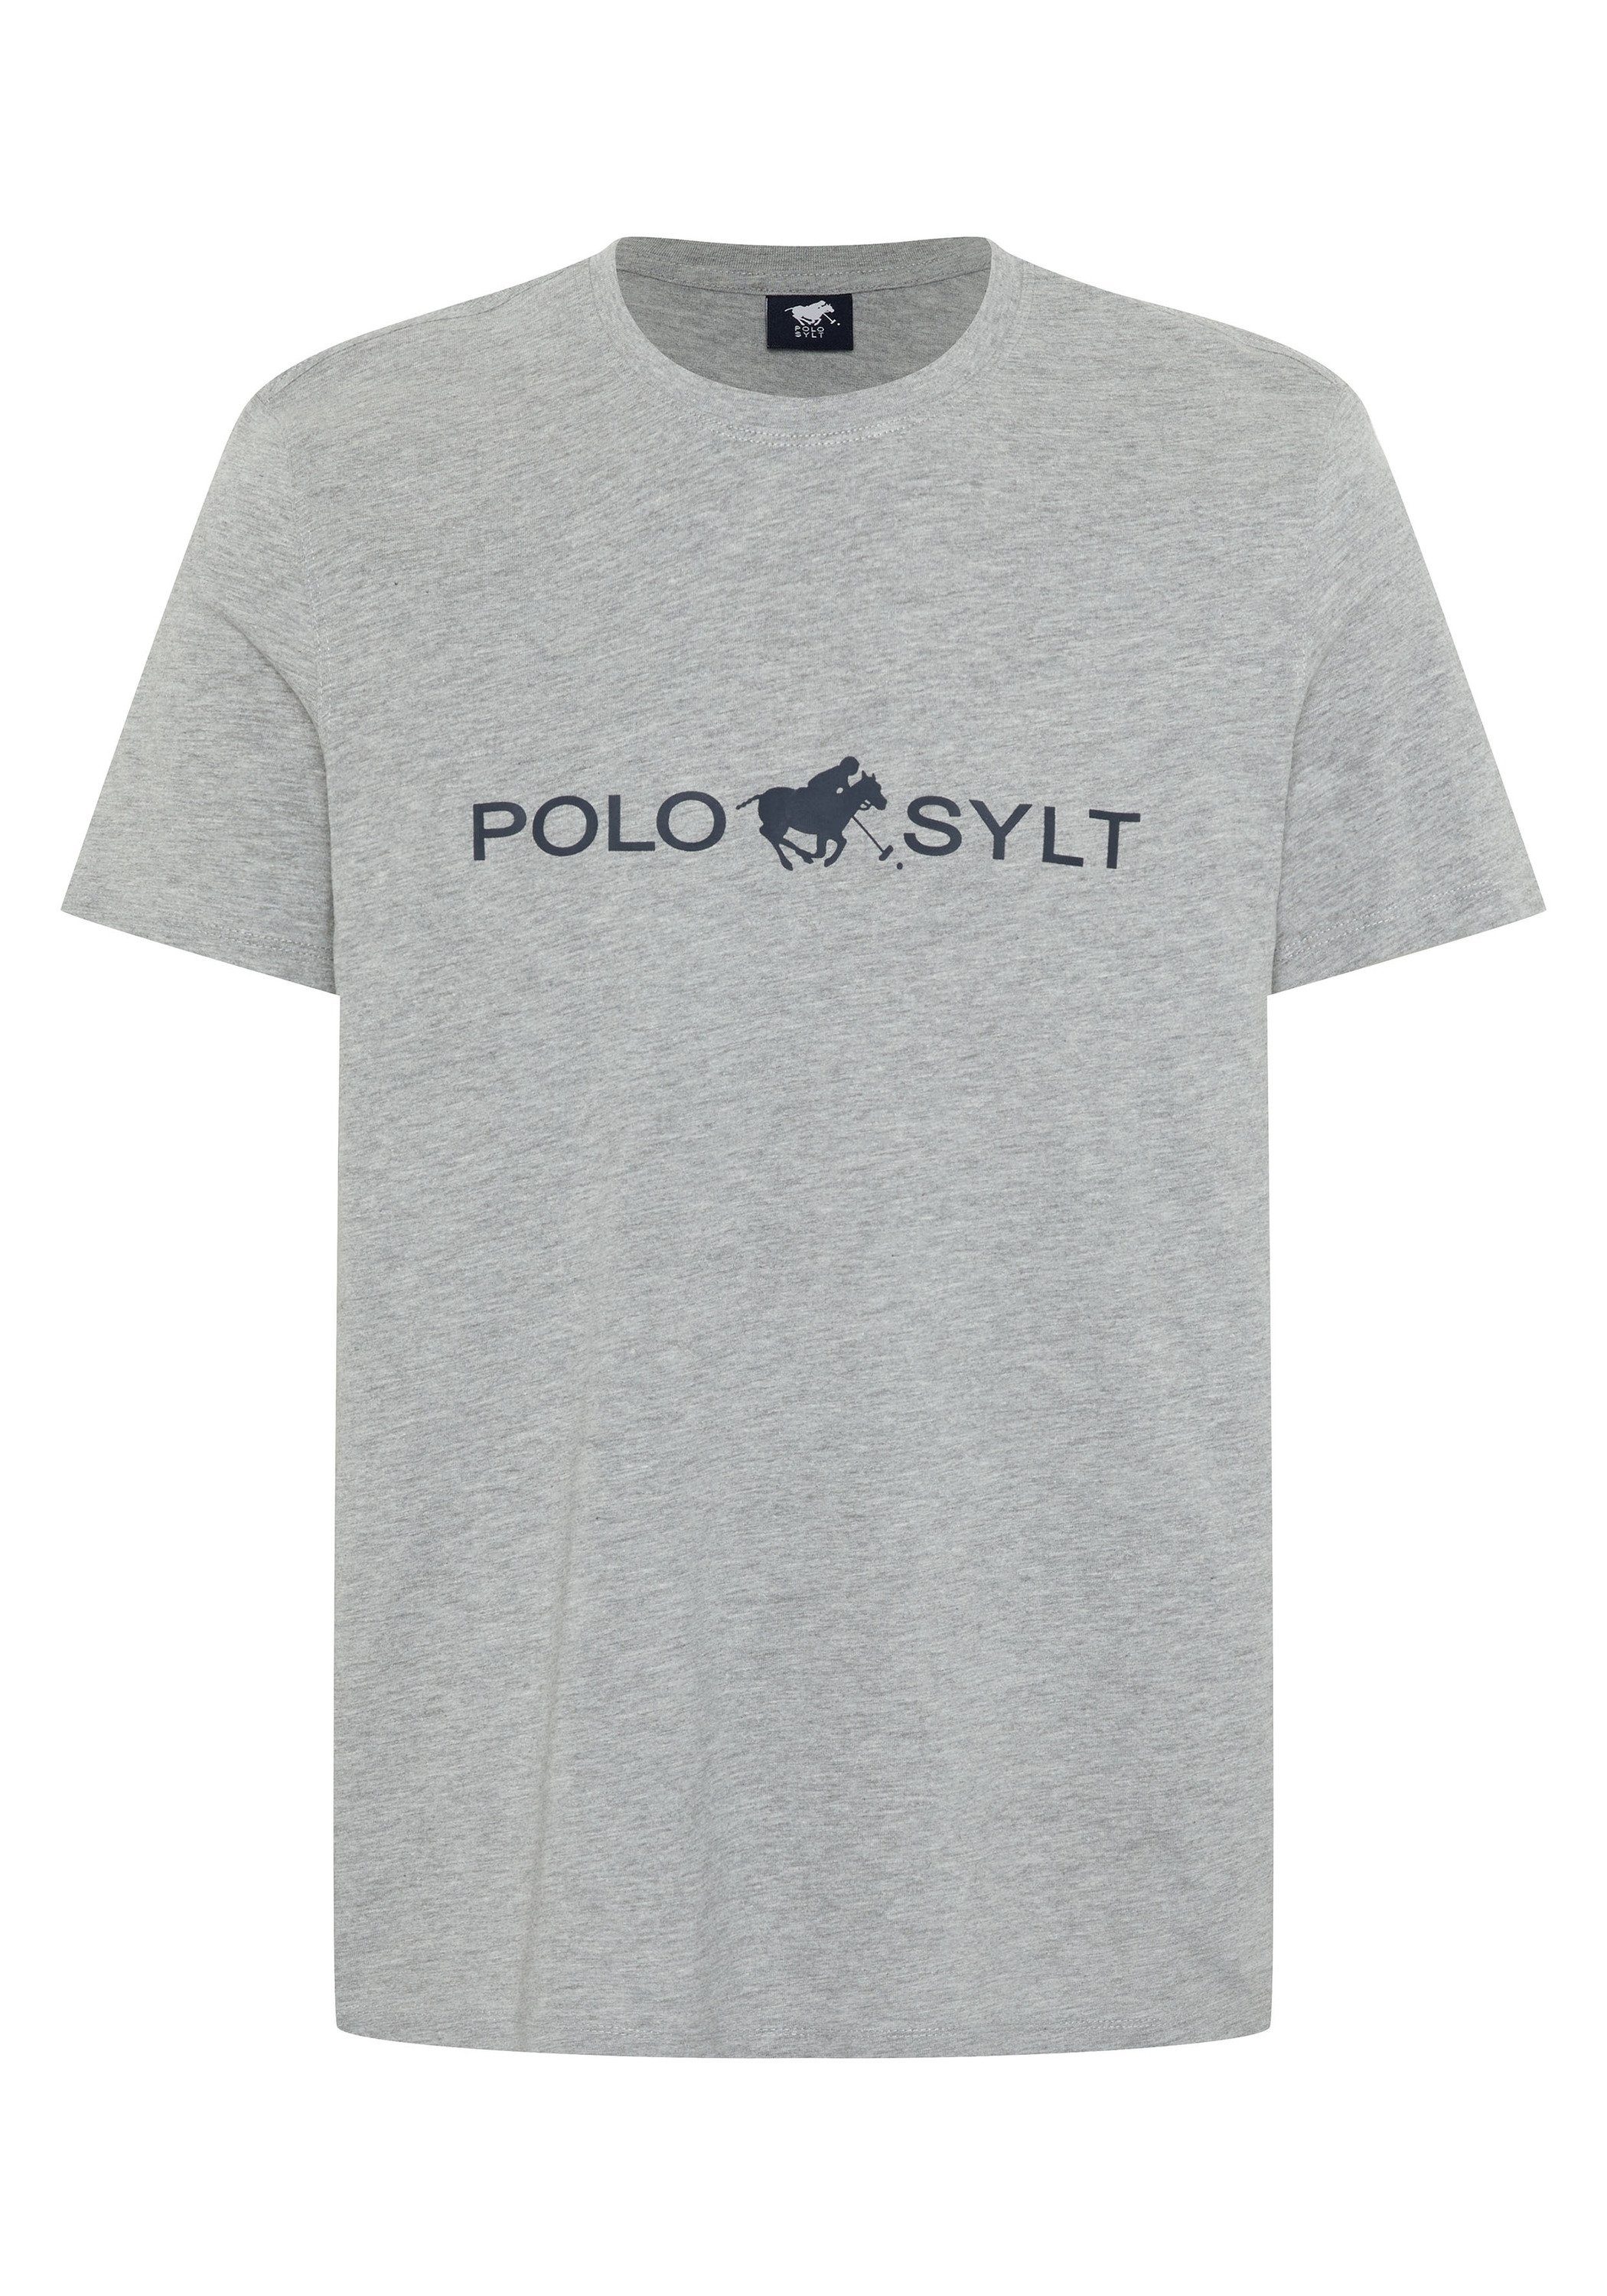 Print-Shirt Gray mit auffälligem Neutral 17-4402M Logo-Print Melange Sylt Polo